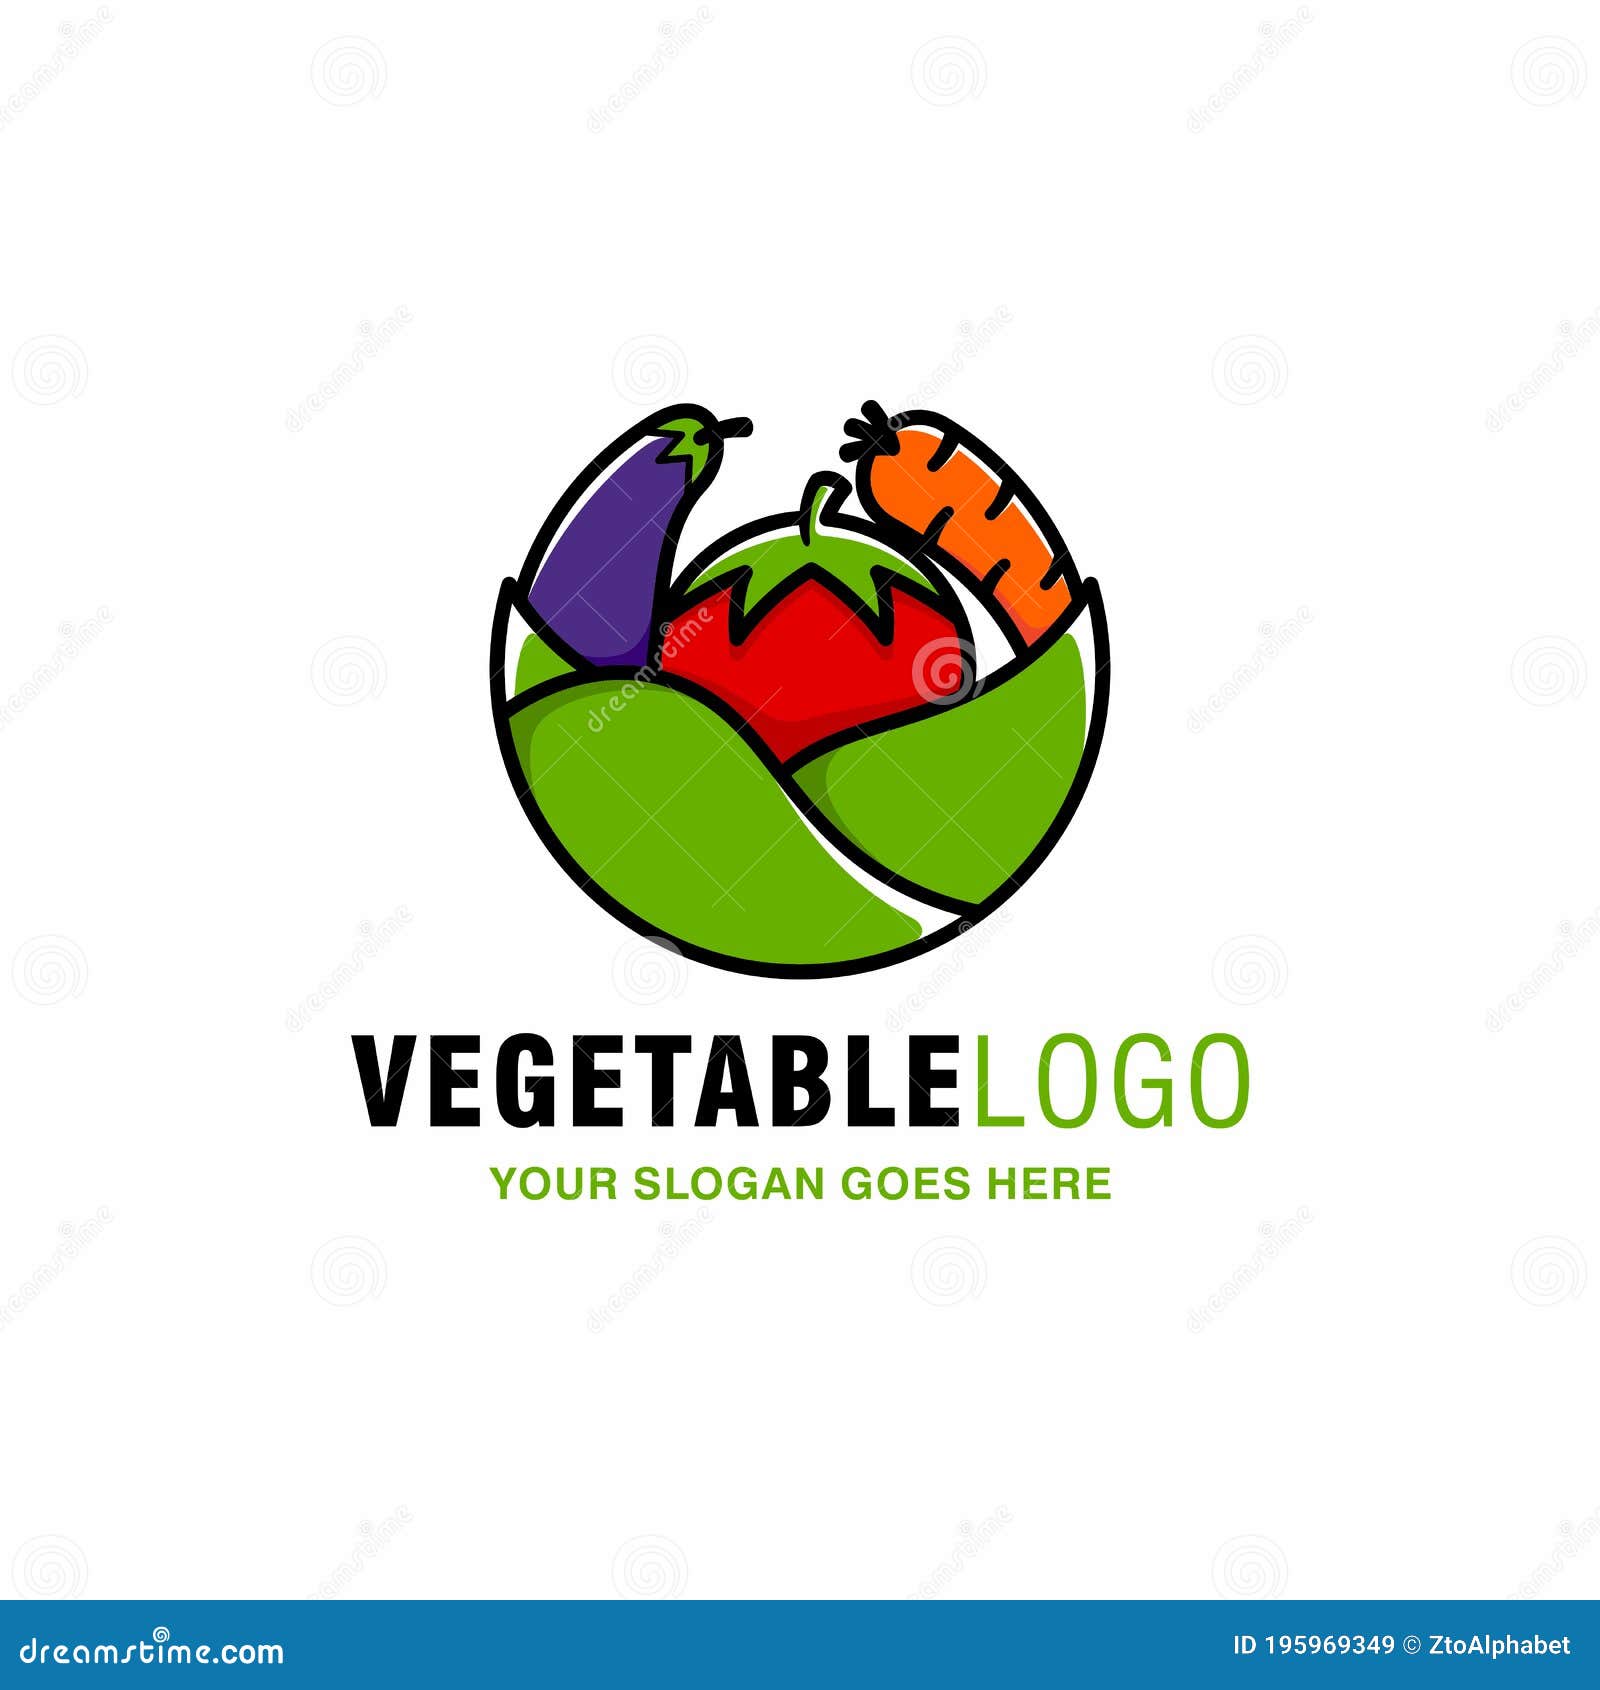 Vegetable Logo - Free Vectors & PSDs to Download